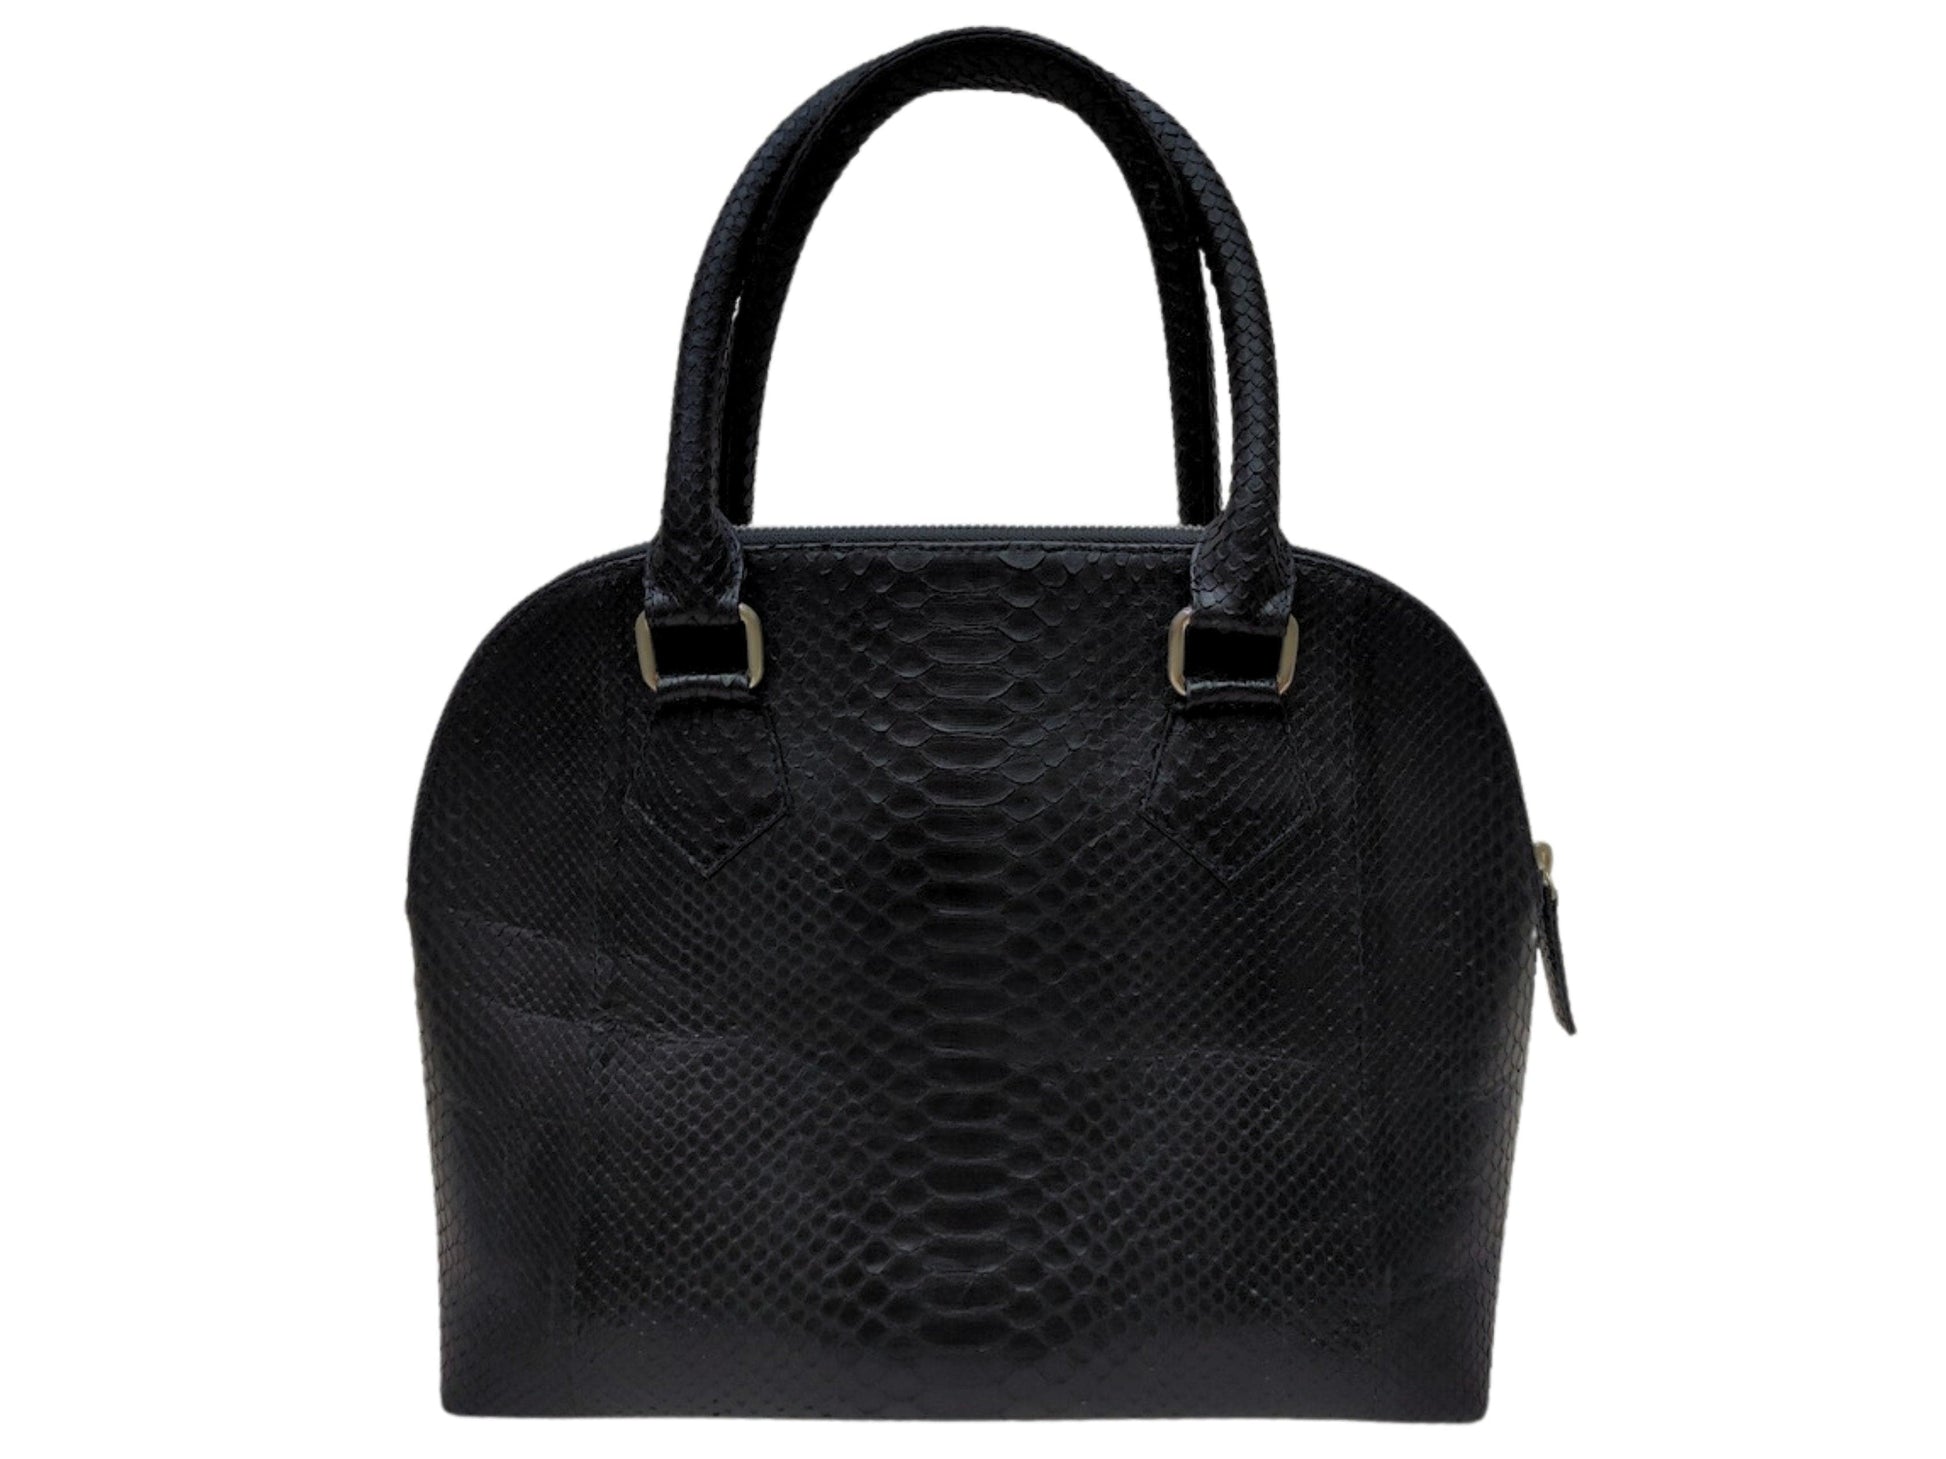 Laptop Bags Snakeskin Tote Laptop Bag,Trendy Work Bag,Fashionable Carryall Black Python Jacket by LFM Fashion